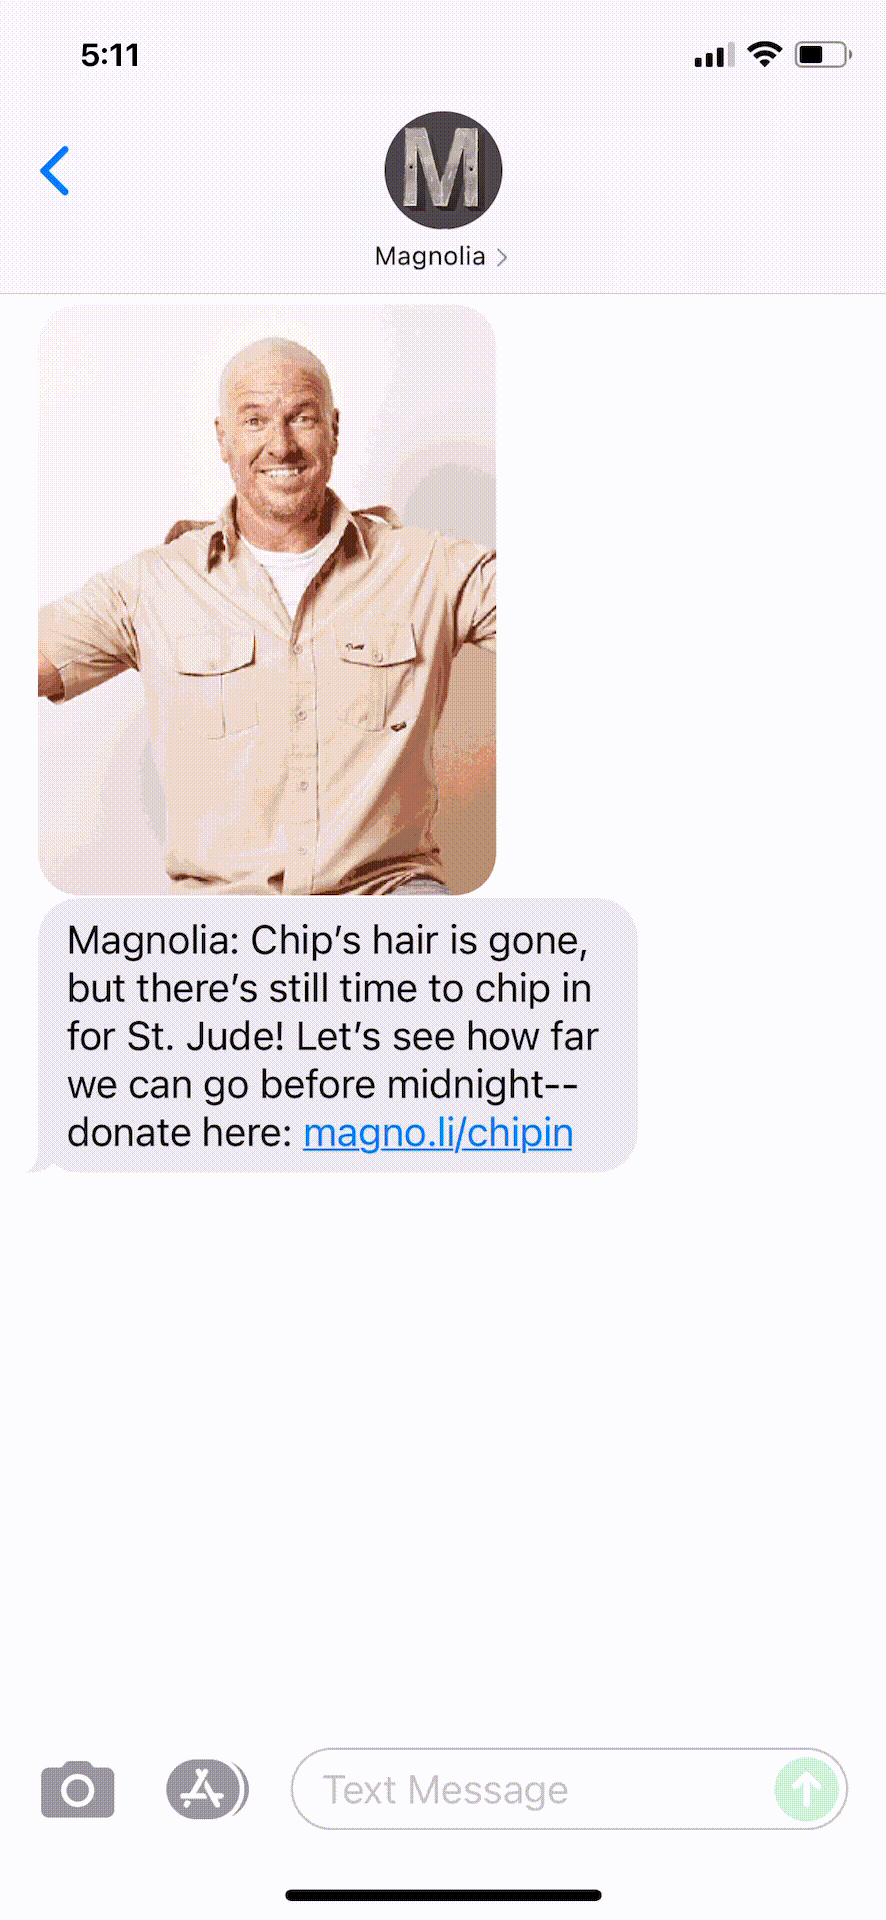 Magnolia-Text-Message-Marketing-Example-08.27.2021